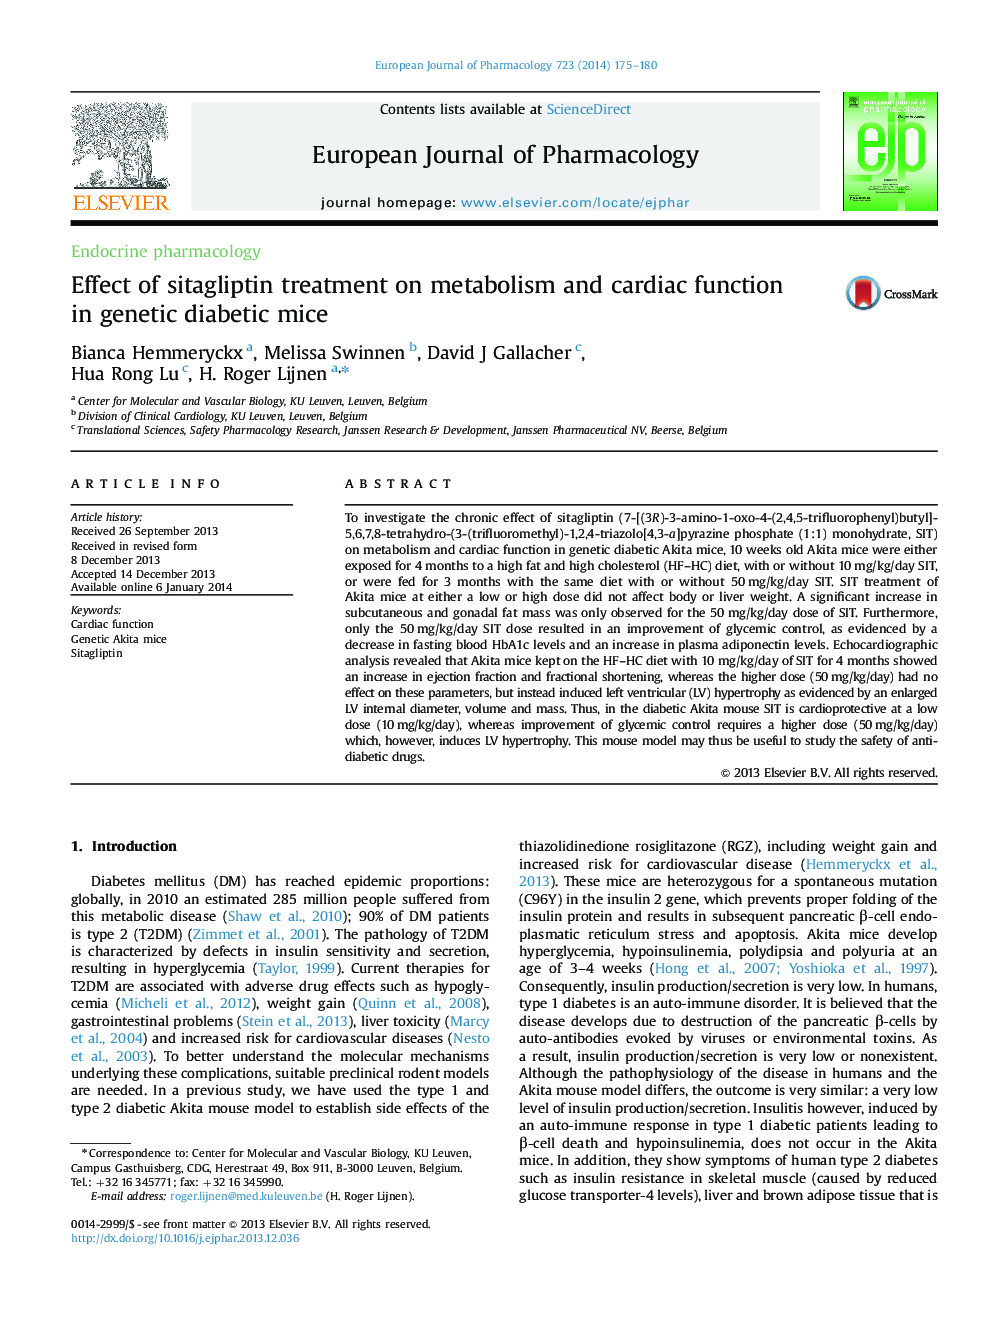 Effect of sitagliptin treatment on metabolism and cardiac function in genetic diabetic mice